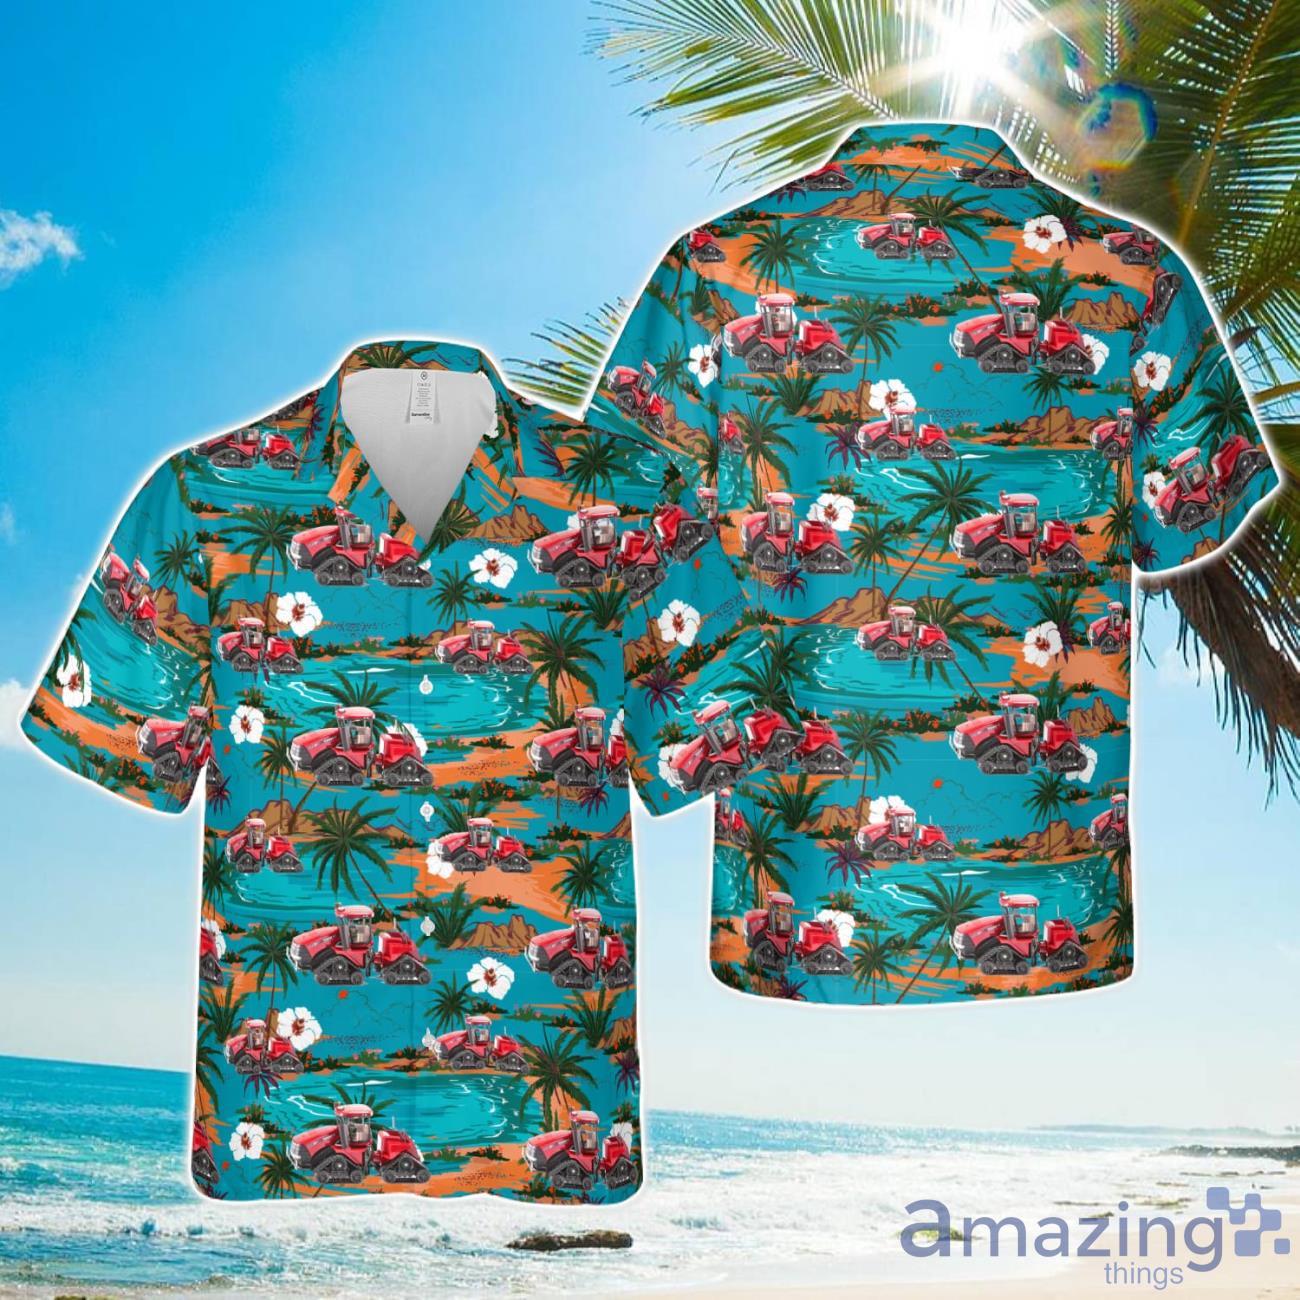 Siku Case IH Quadtrac 600 Tractor 3275 Hawaiian Shirt Aloha Beach Shirt Product Photo 1